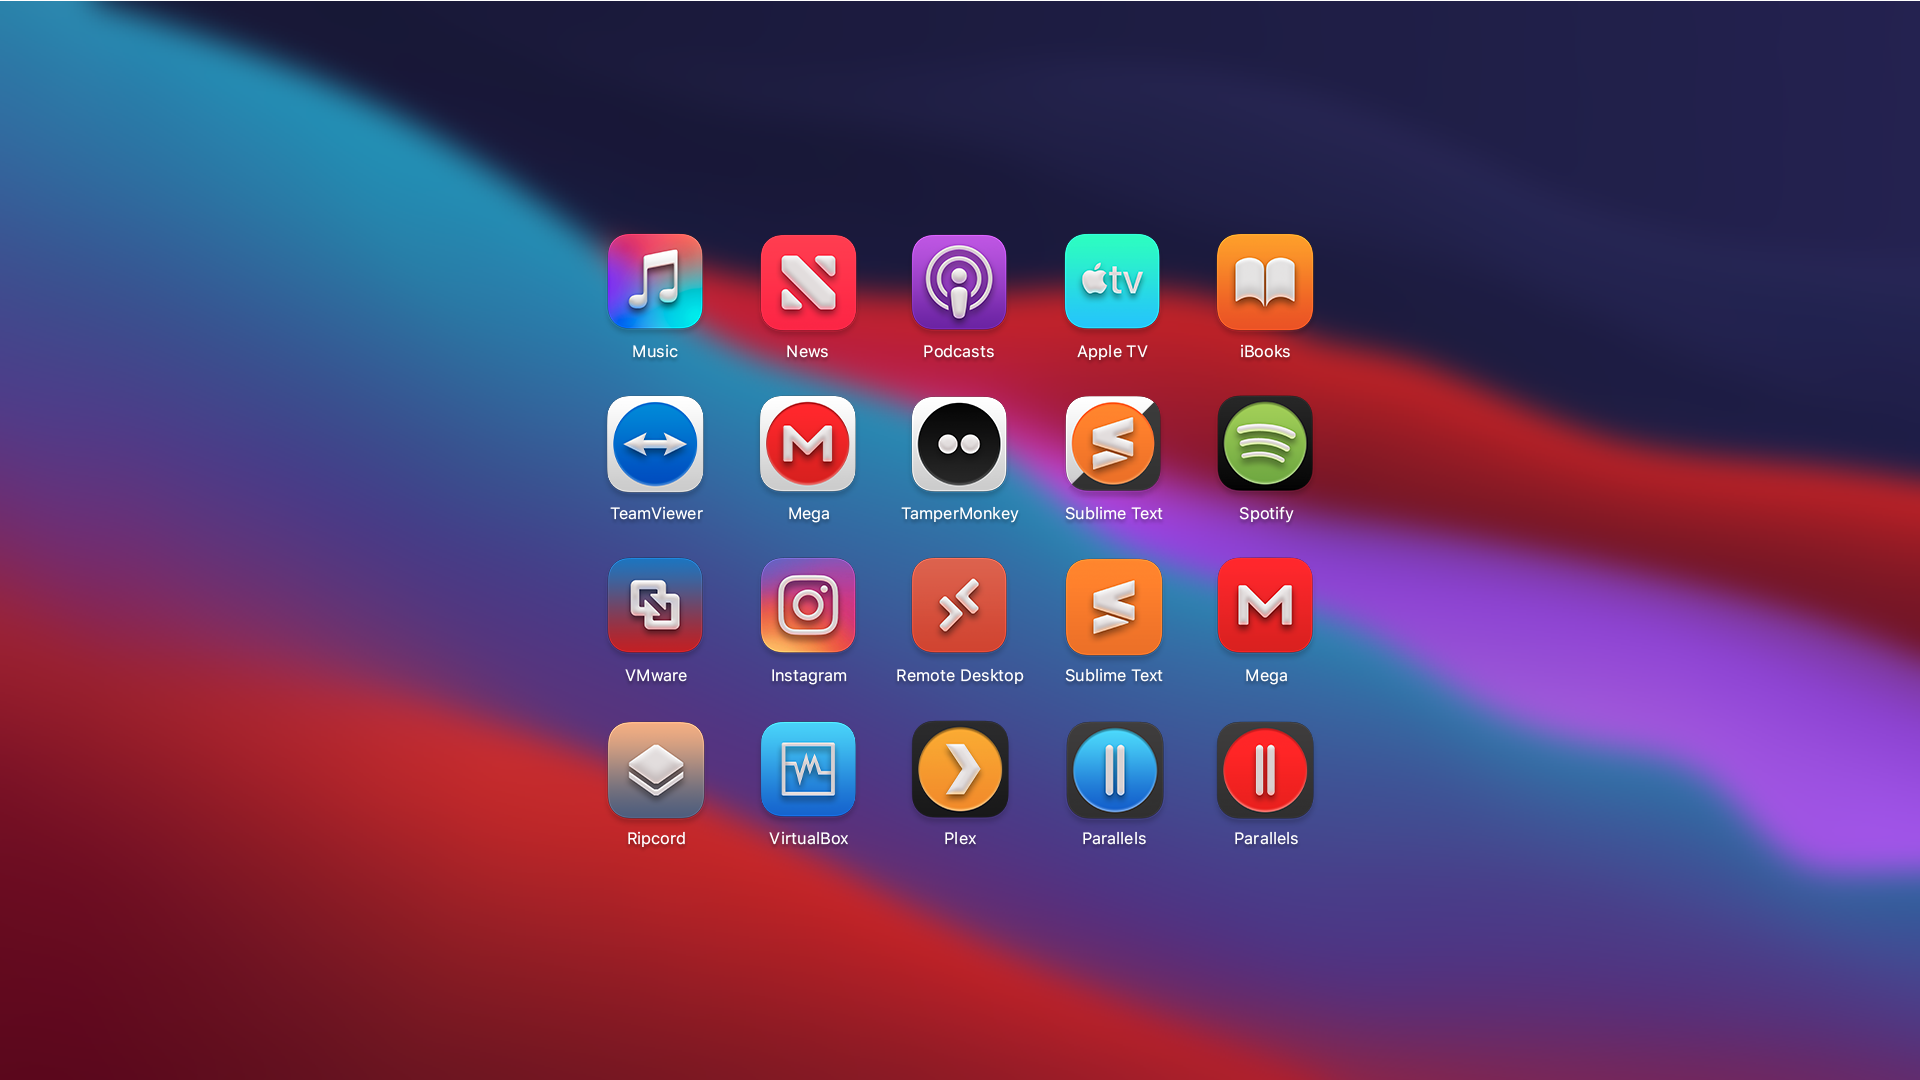 Roblox Alt macOS BigSur - Social media & Logos Icons